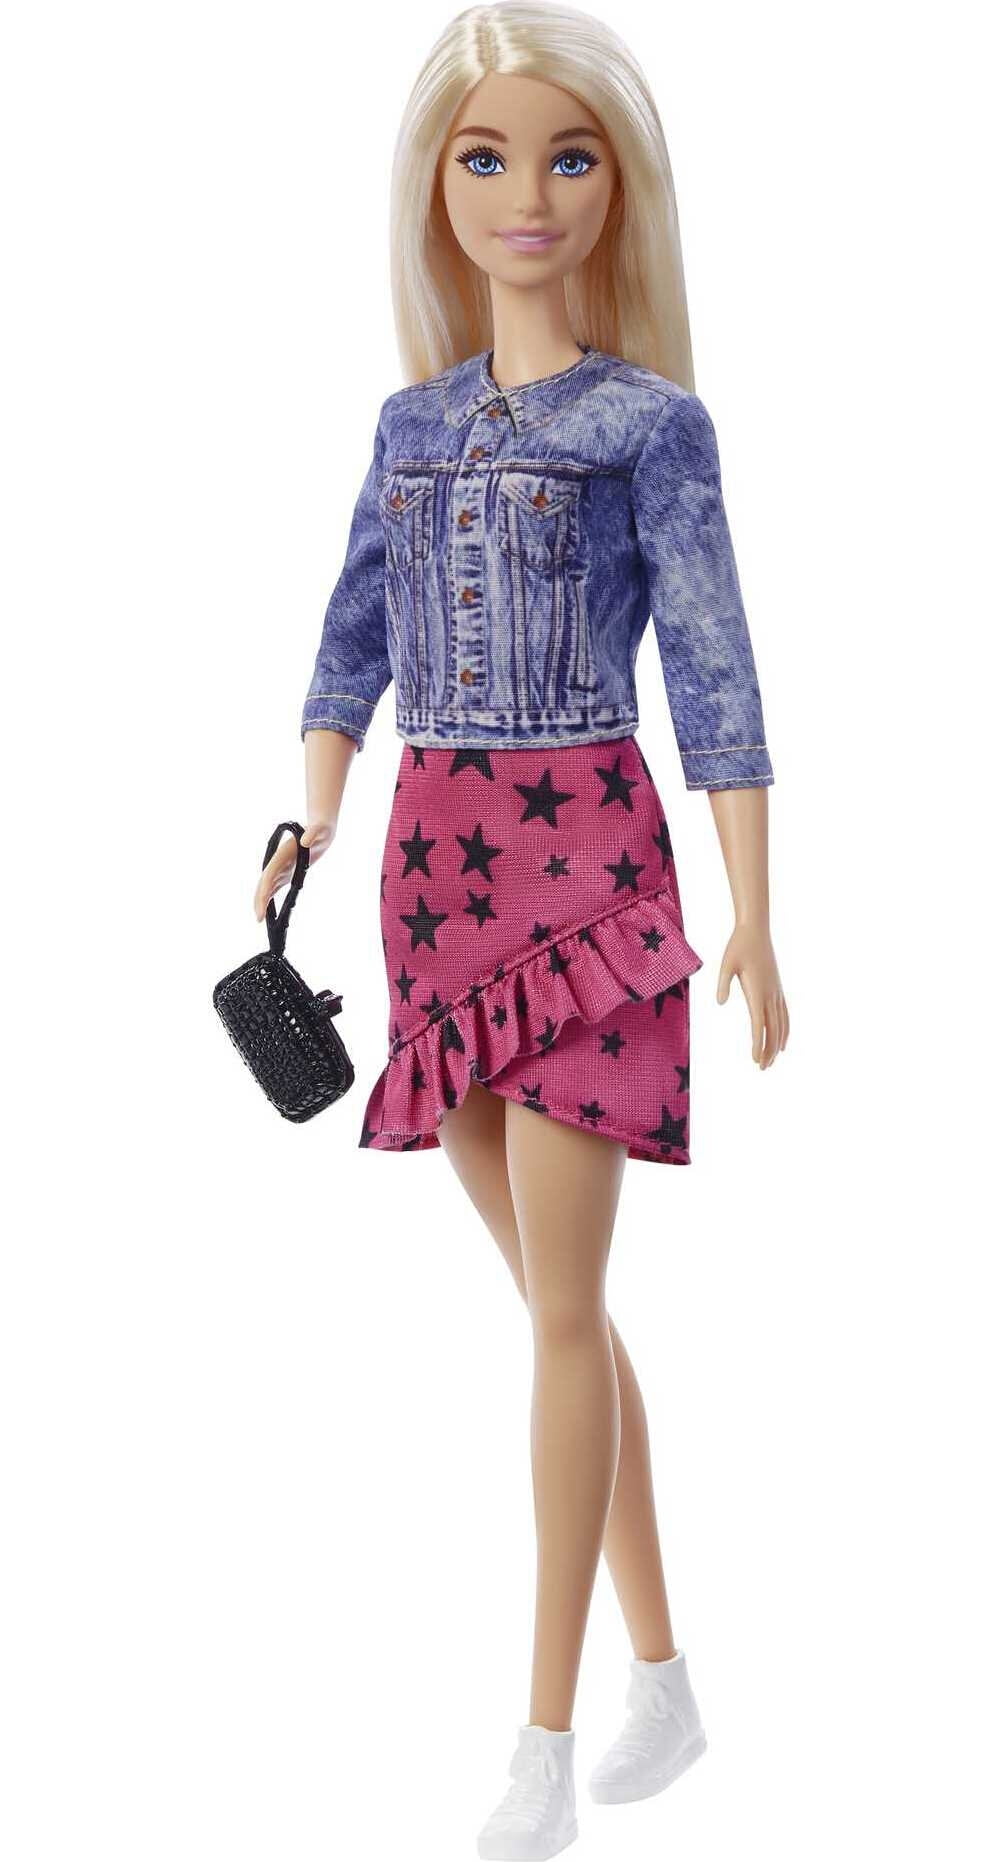 Barbie Fashionista Ken Doll 174 Check Blonde Malibu 2021 Zip new  *LAST STOCK 